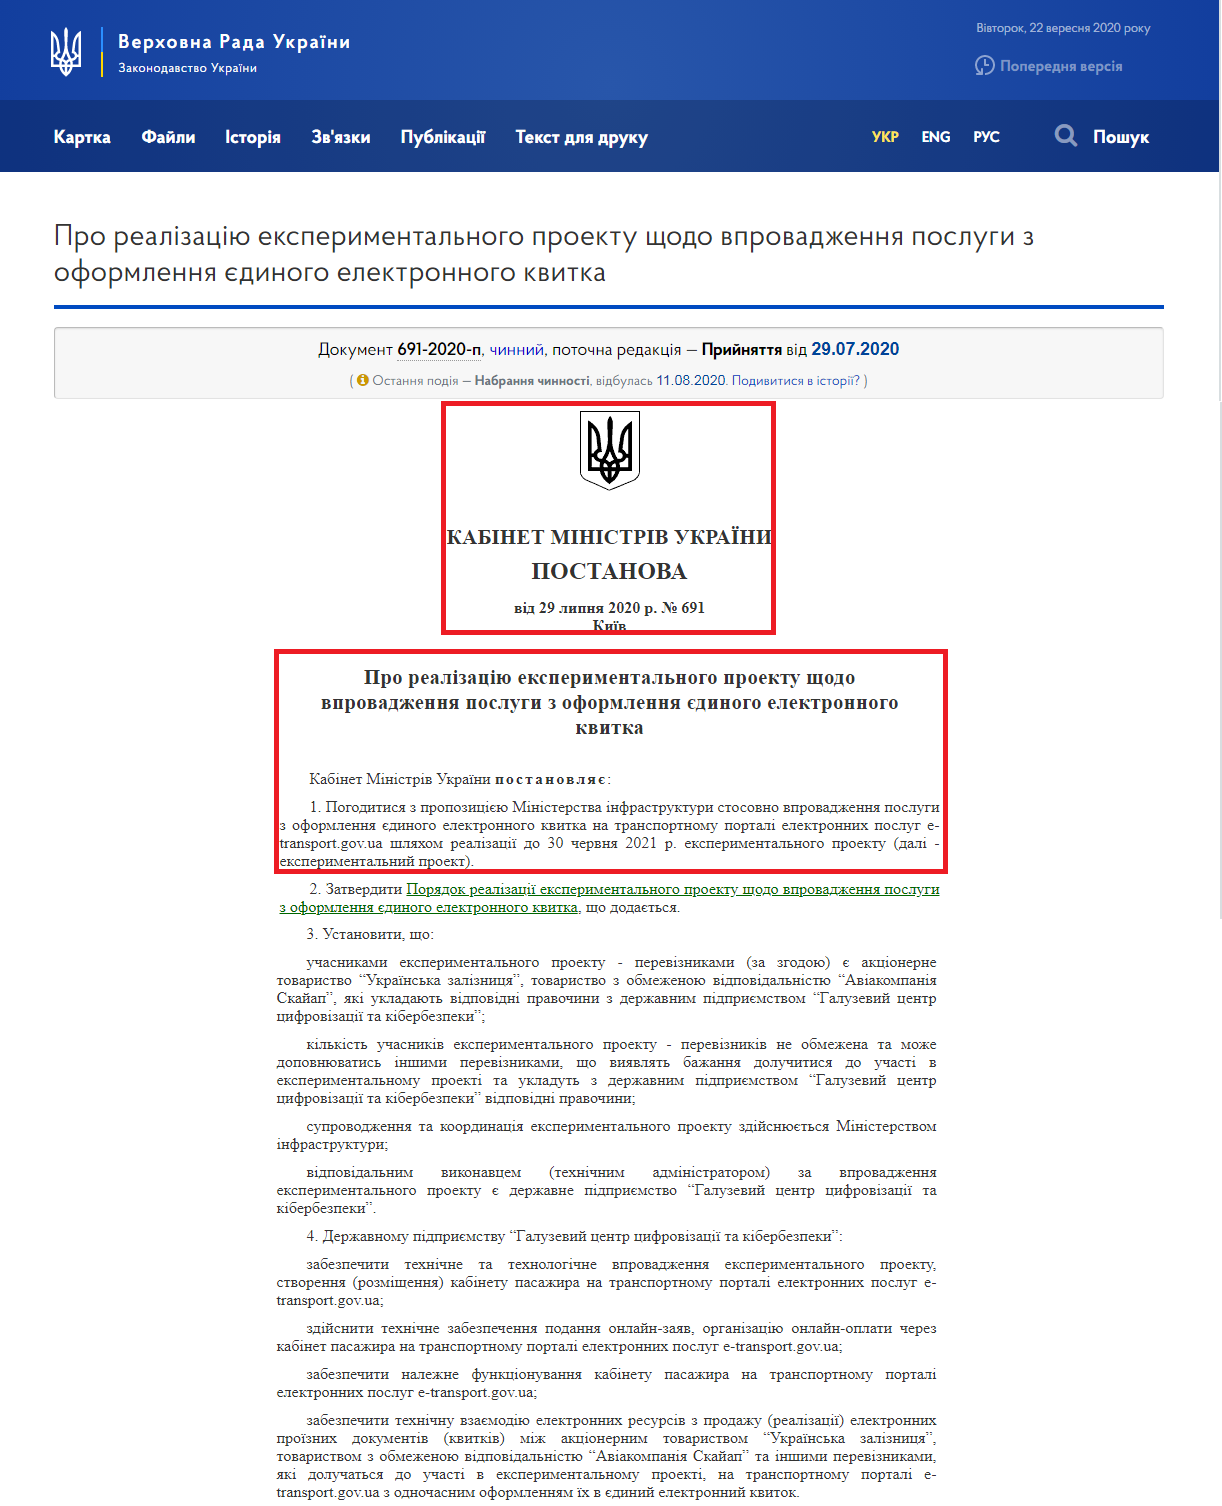 https://zakon.rada.gov.ua/laws/show/691-2020-%D0%BF#Text